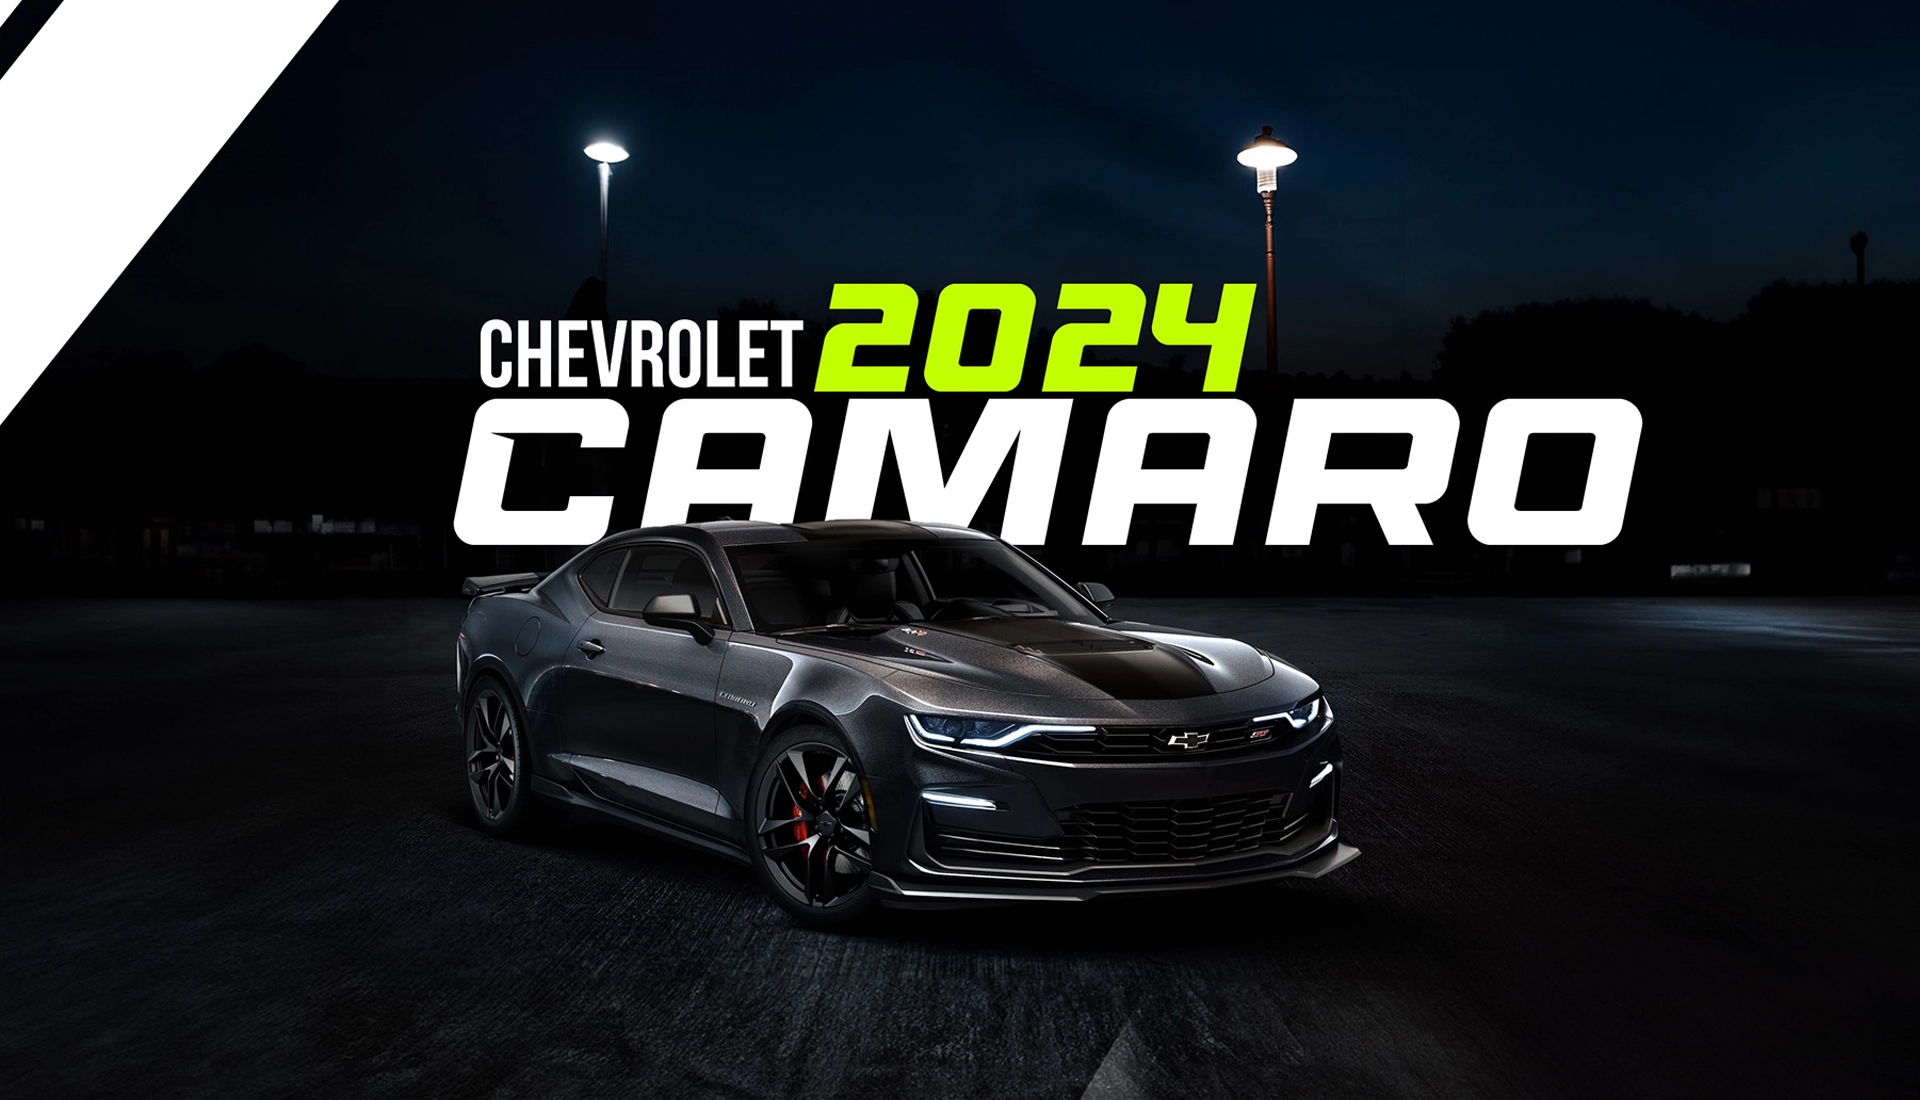 Right hand drive Chevrolet Camaro ZL1